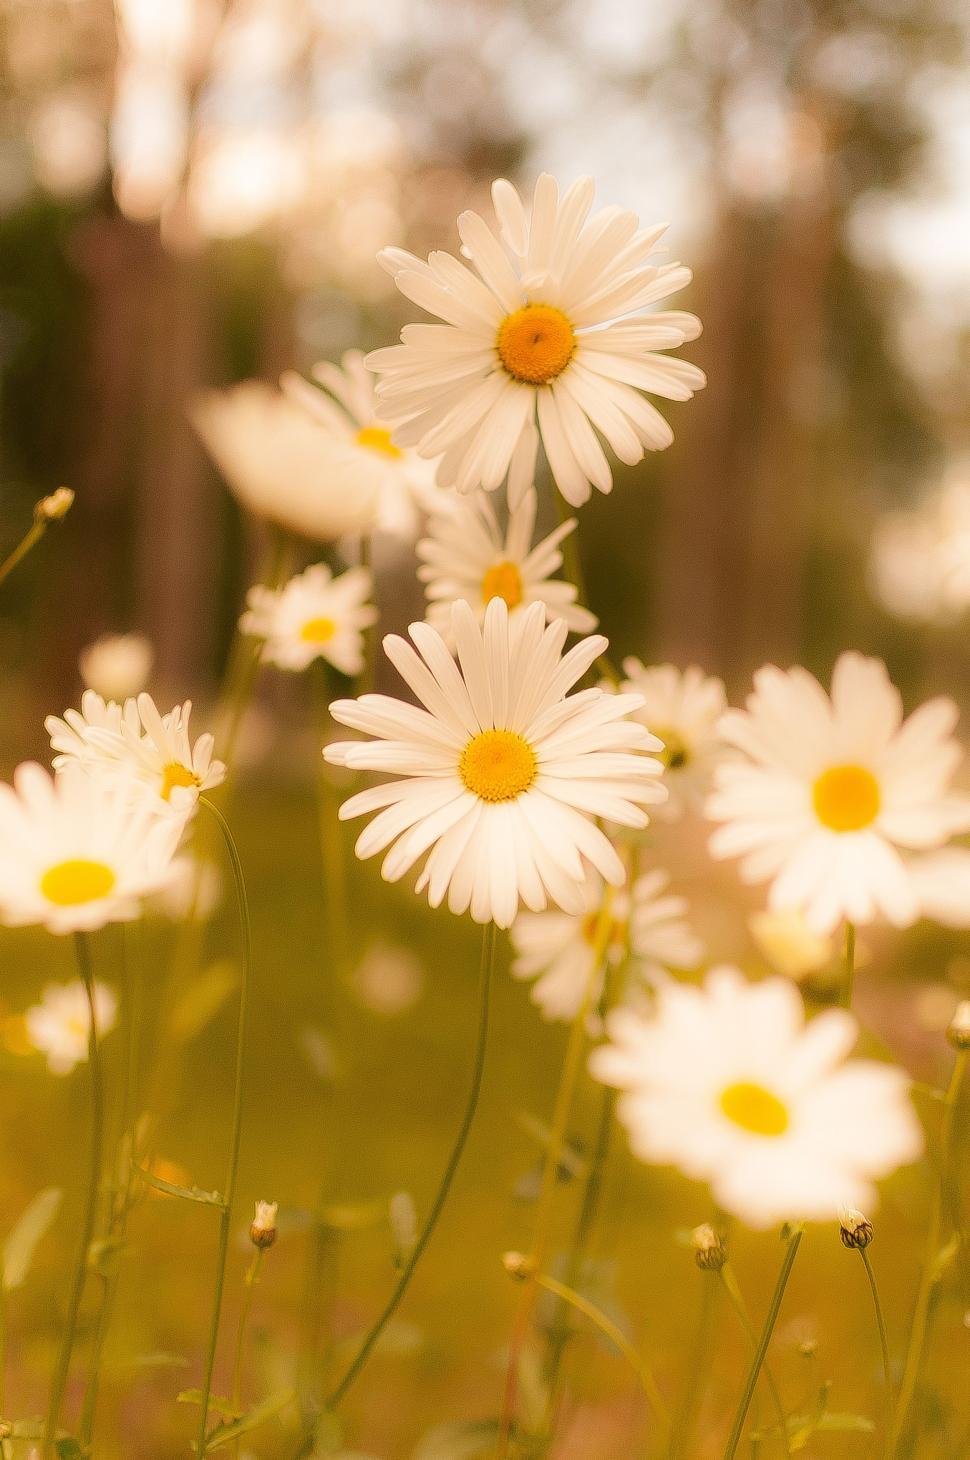 Free Image of White daisy flowers 